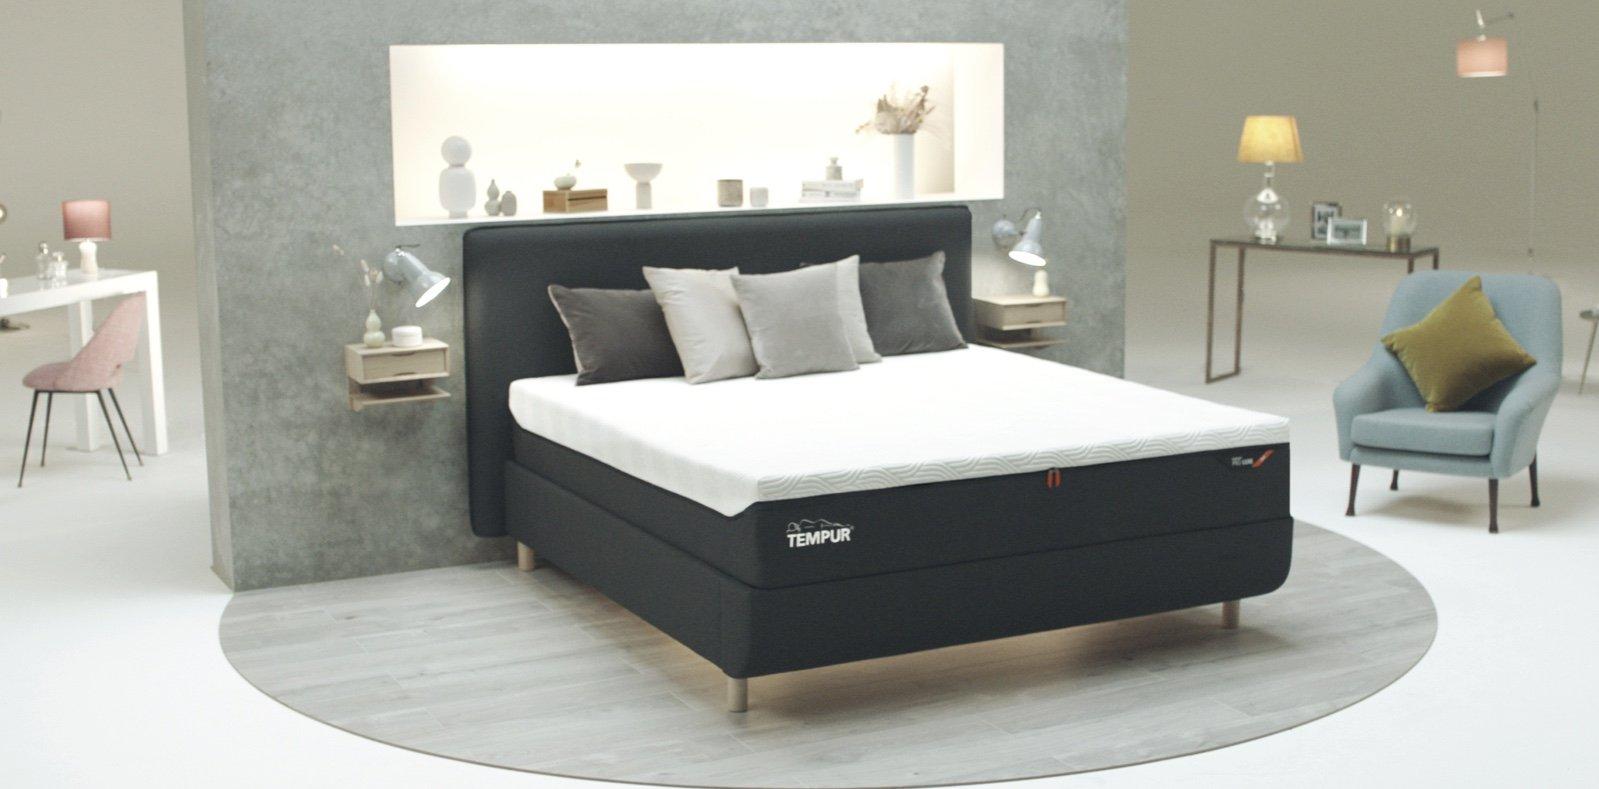 bed with a TEMPUR® mattress